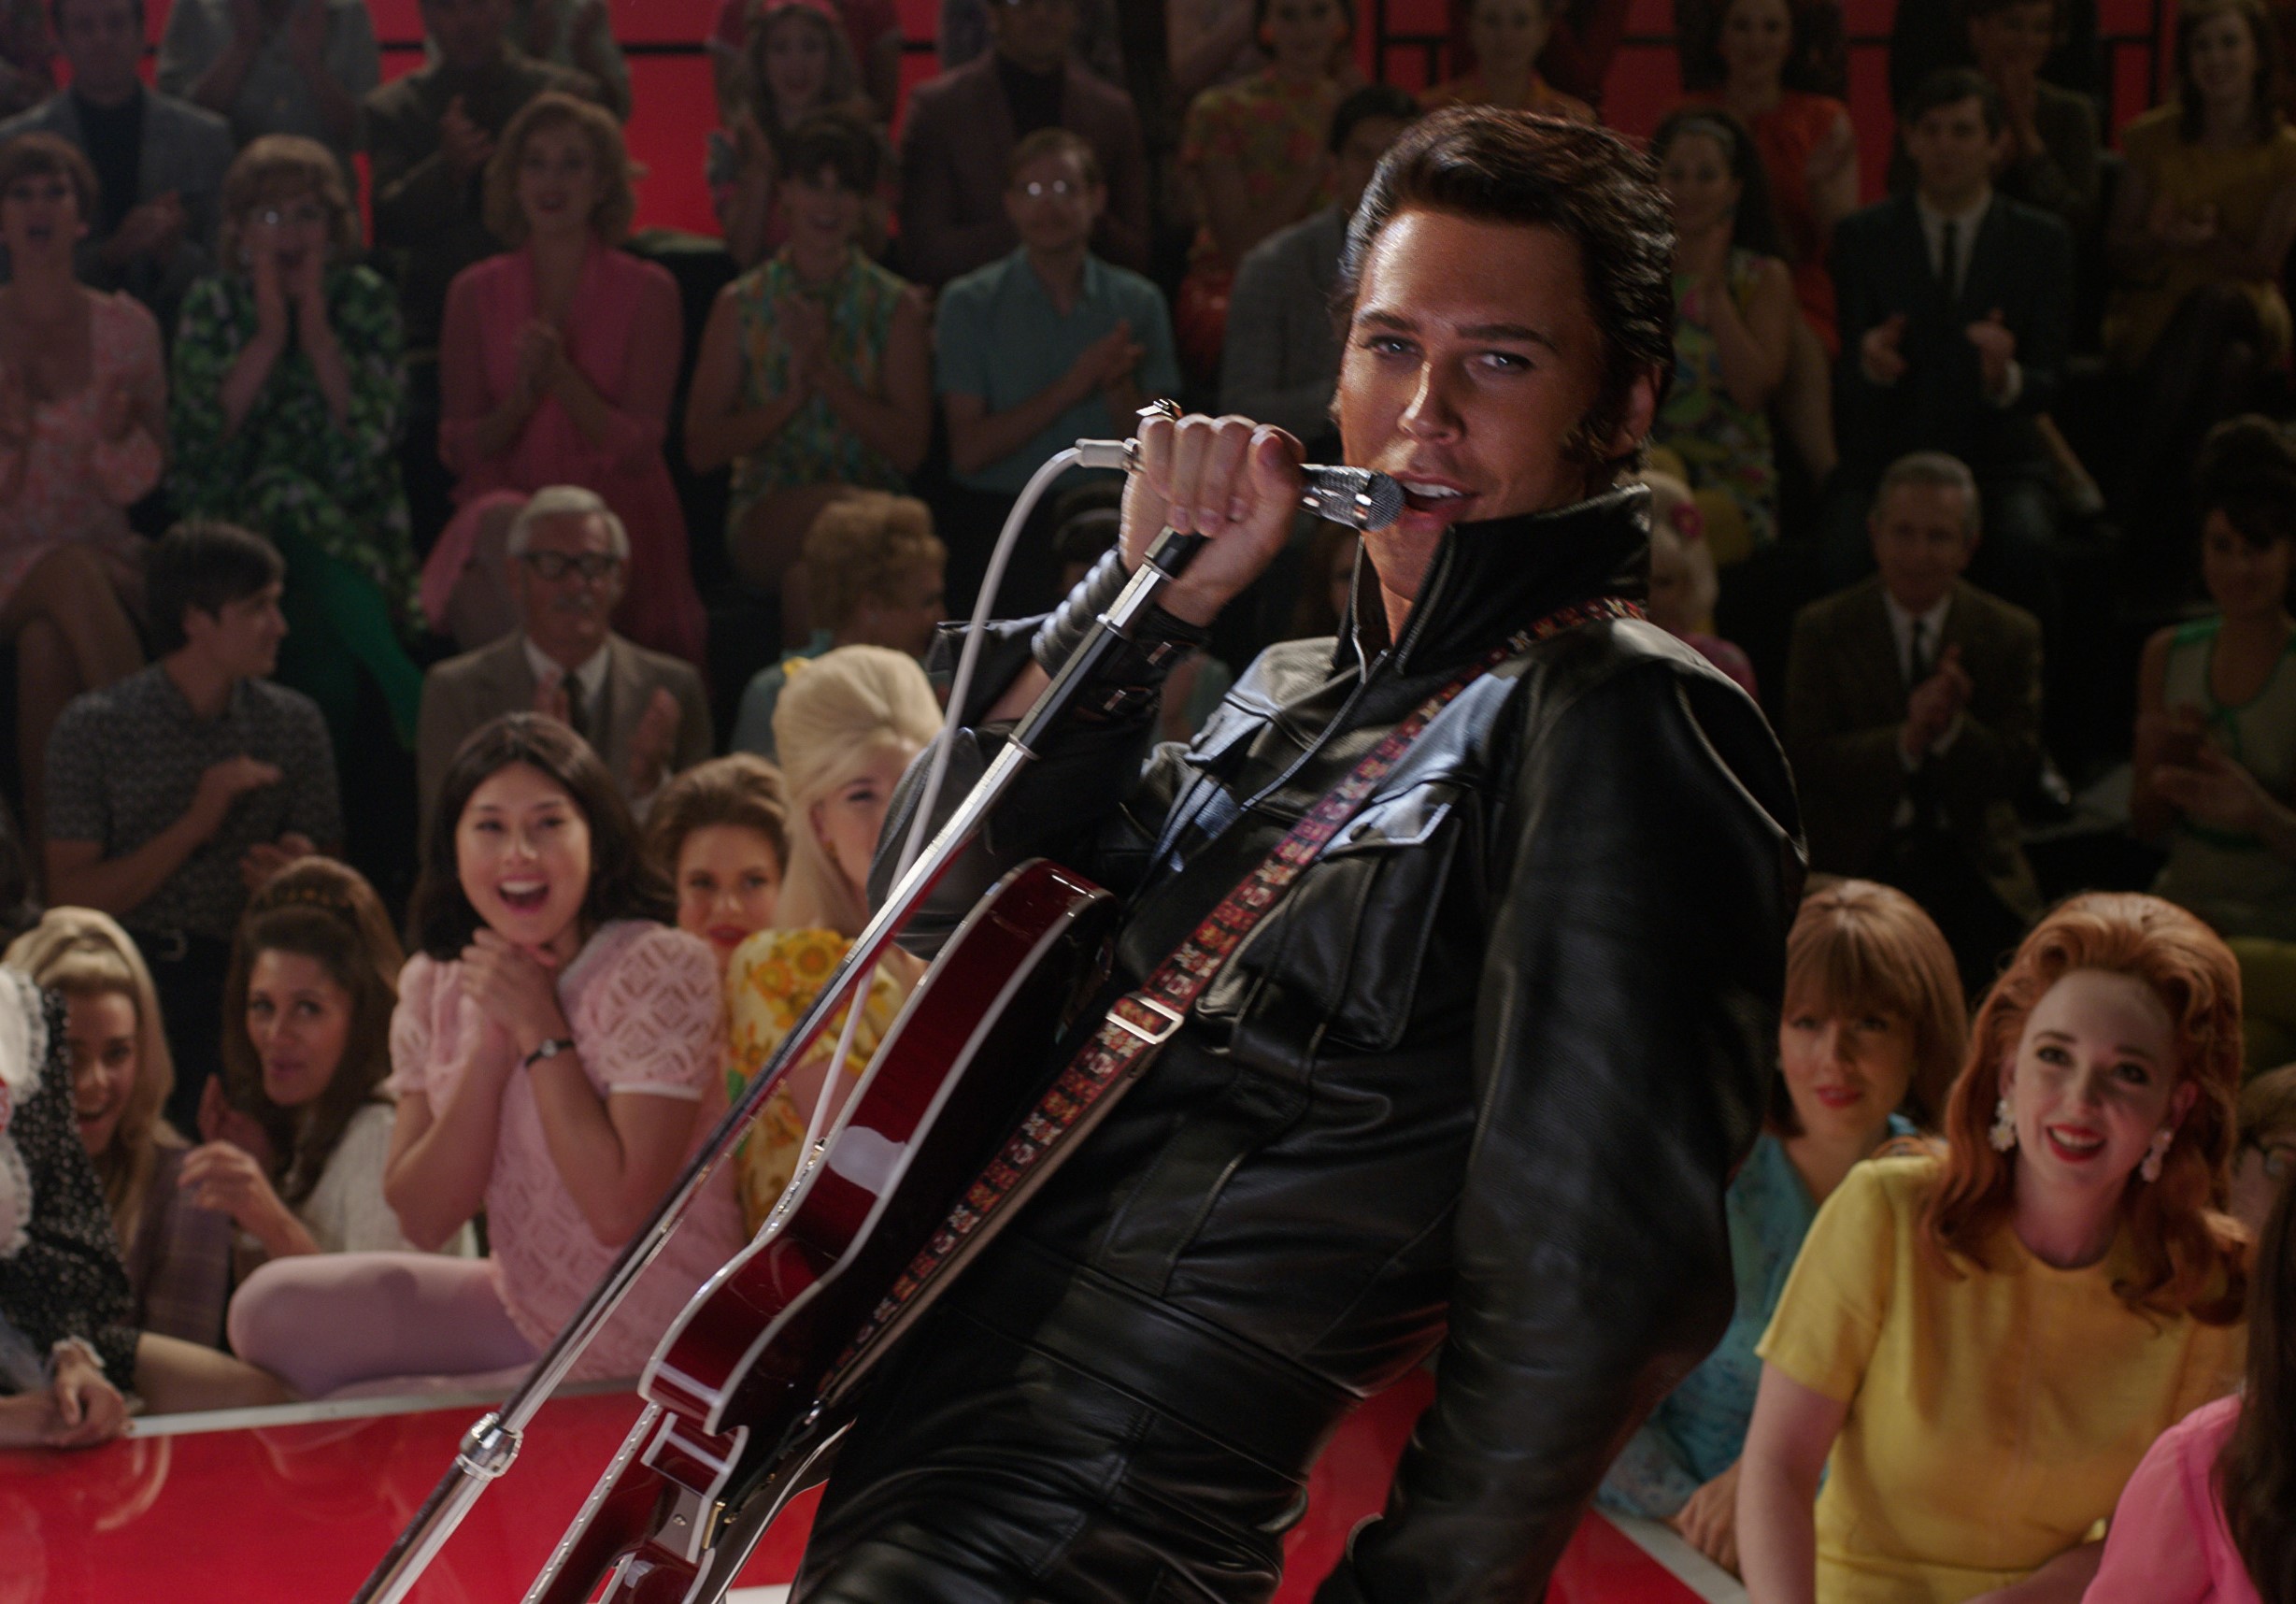 Elvis: Kisah Kepopuleran dan Kejatuhan Sang Raja Rock & Roll